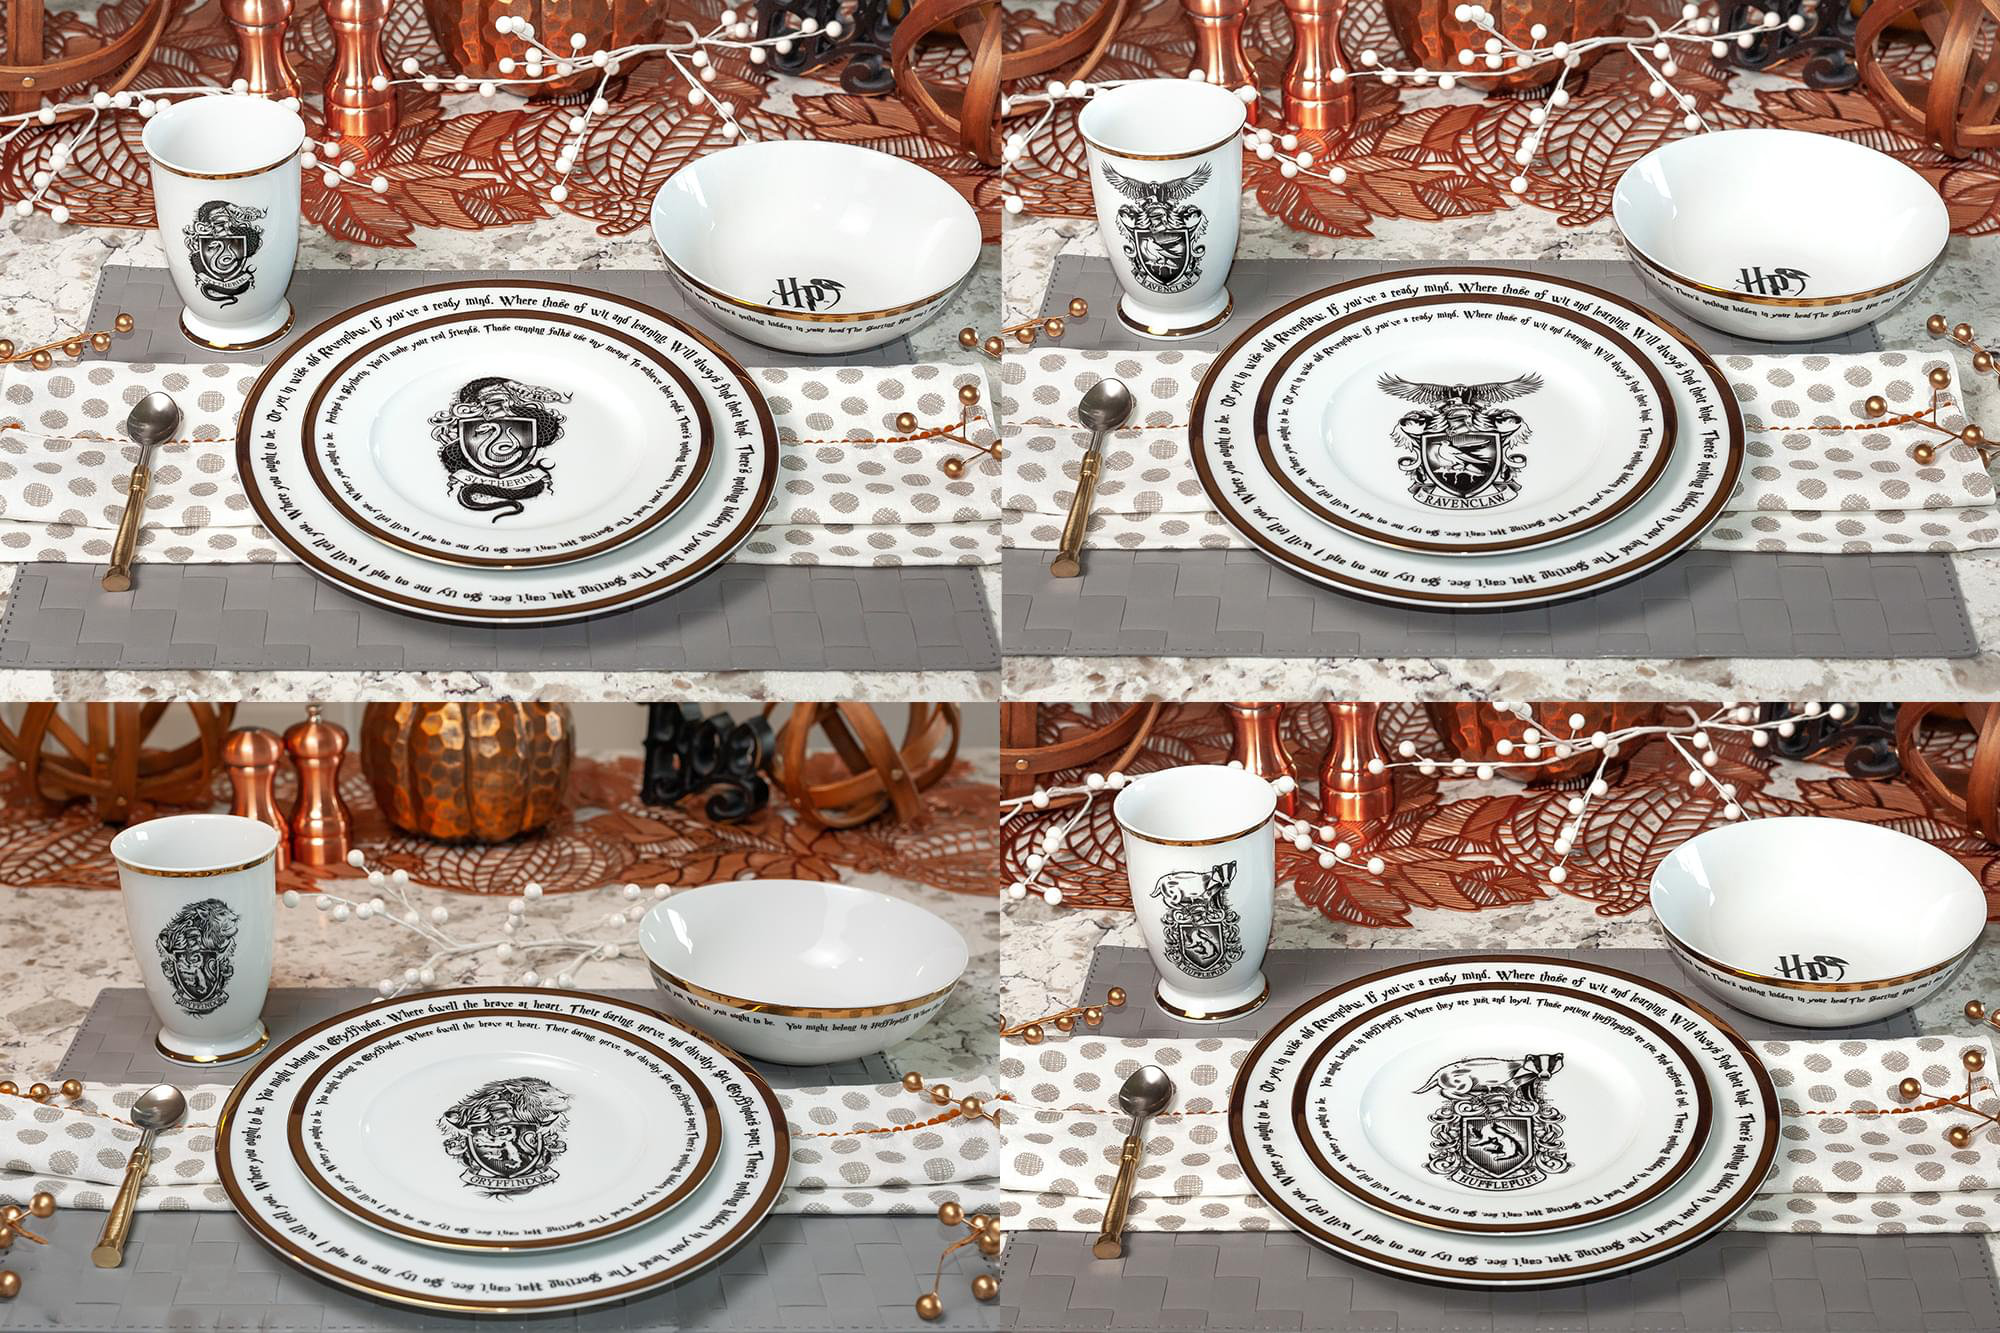 Ukonic Ceramic Dinnerware Set - Service for 4